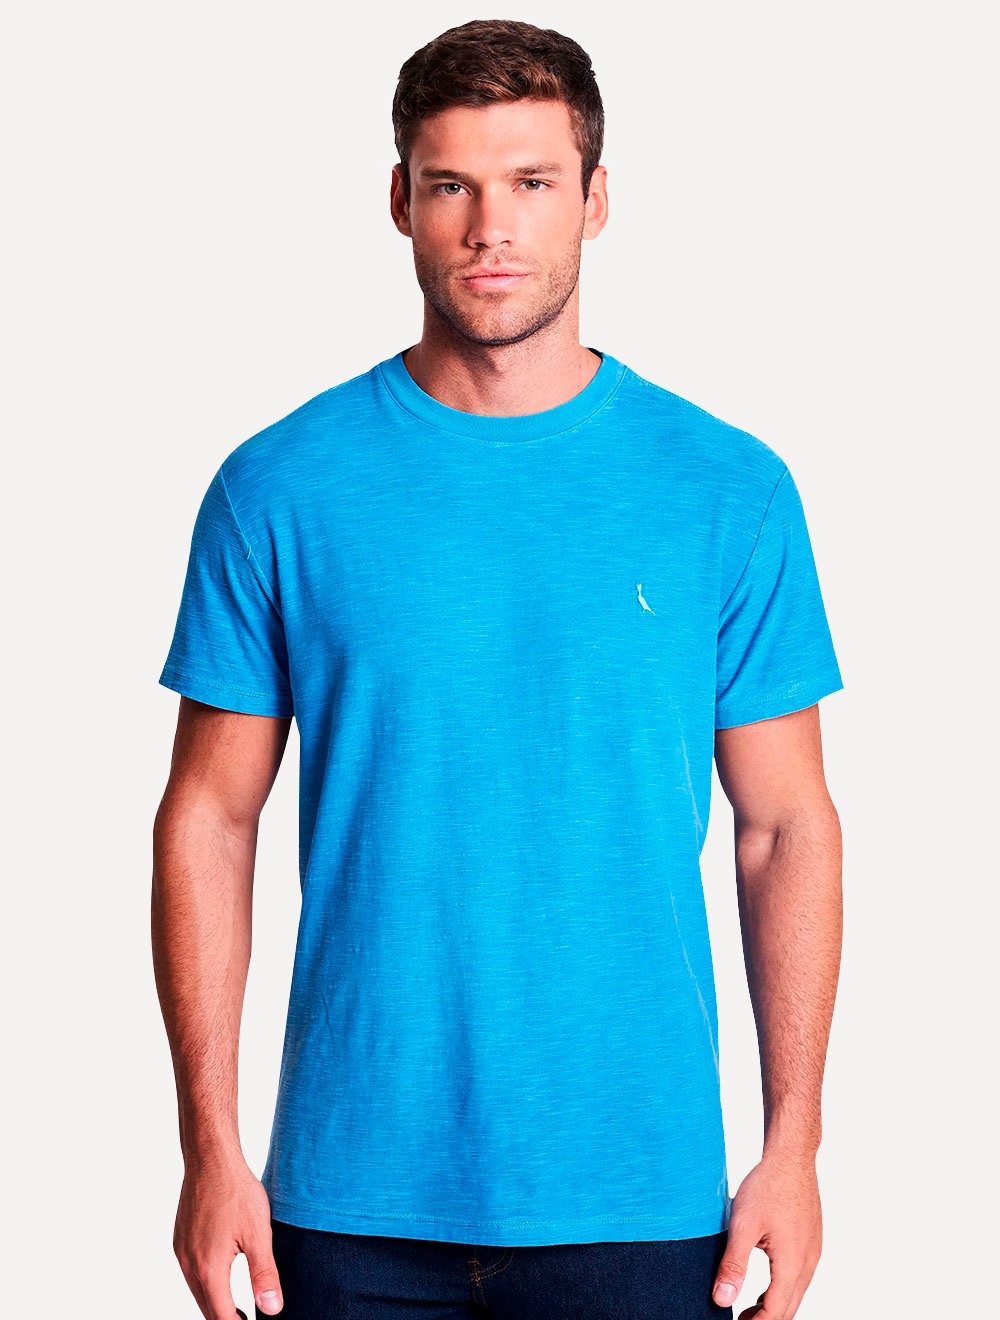 Camiseta Reserva Masculina Flamê Stone Azul Royal